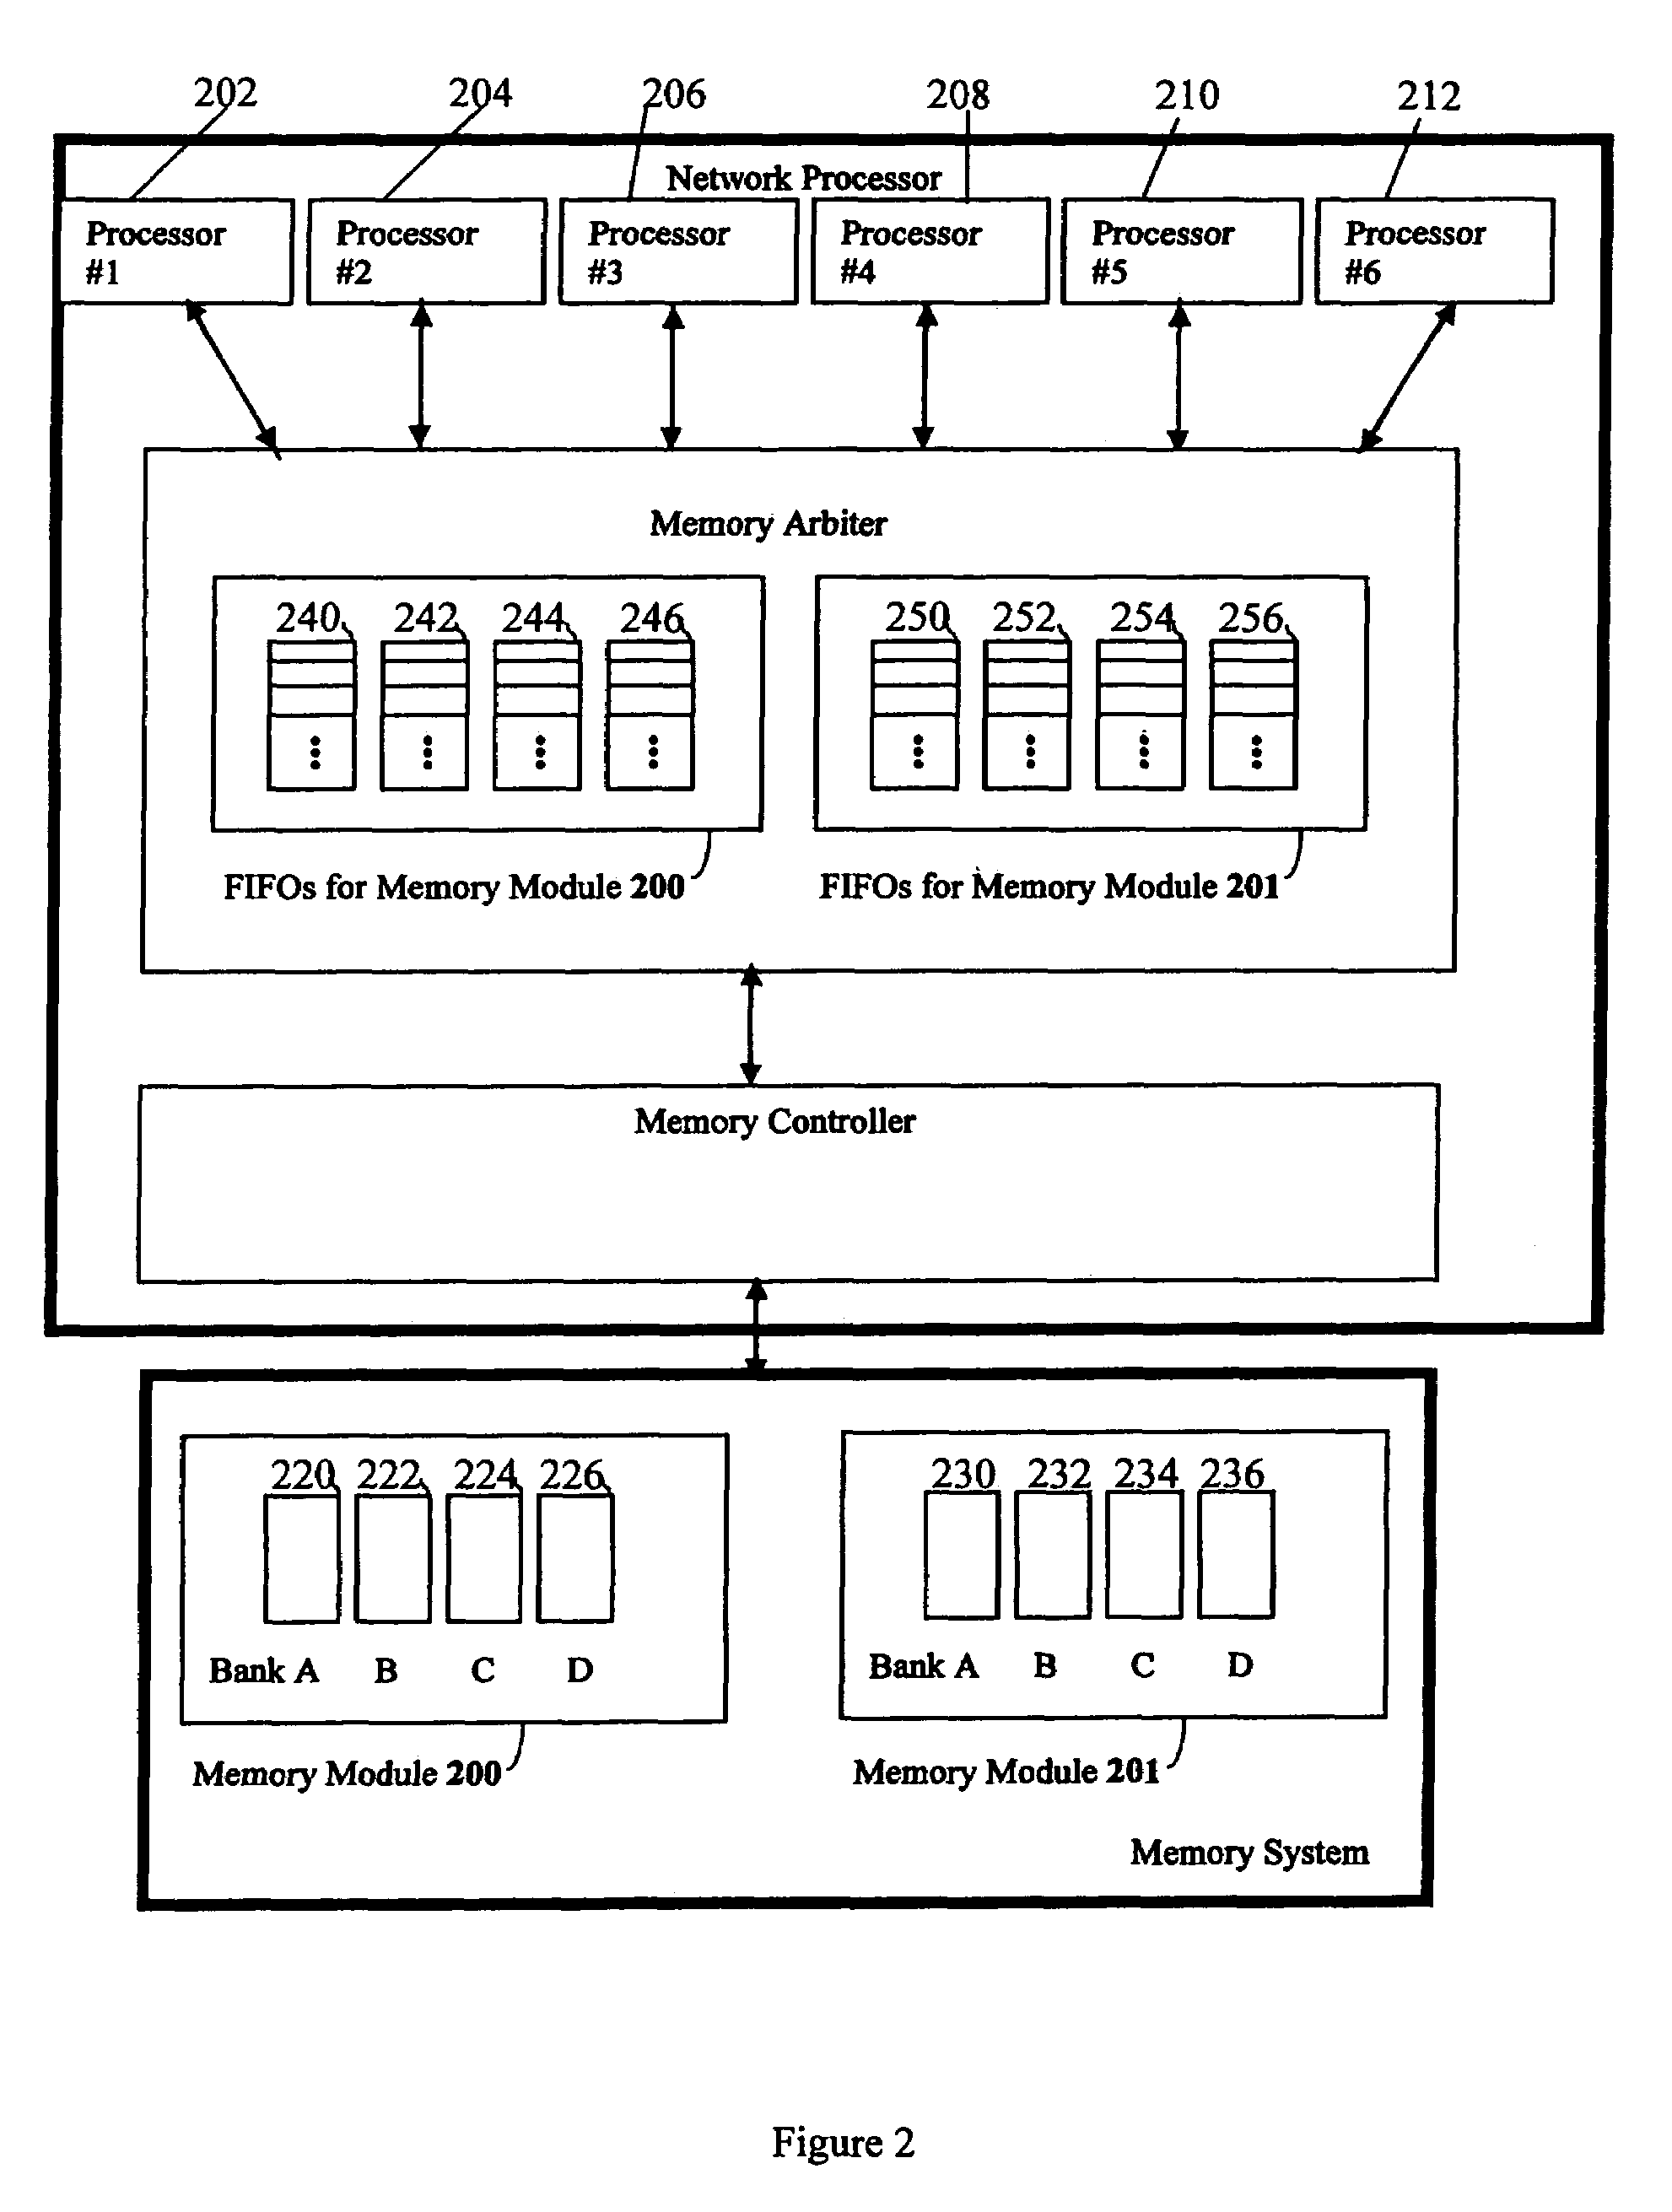 Atomic read/write support in a multi-module memory configuration